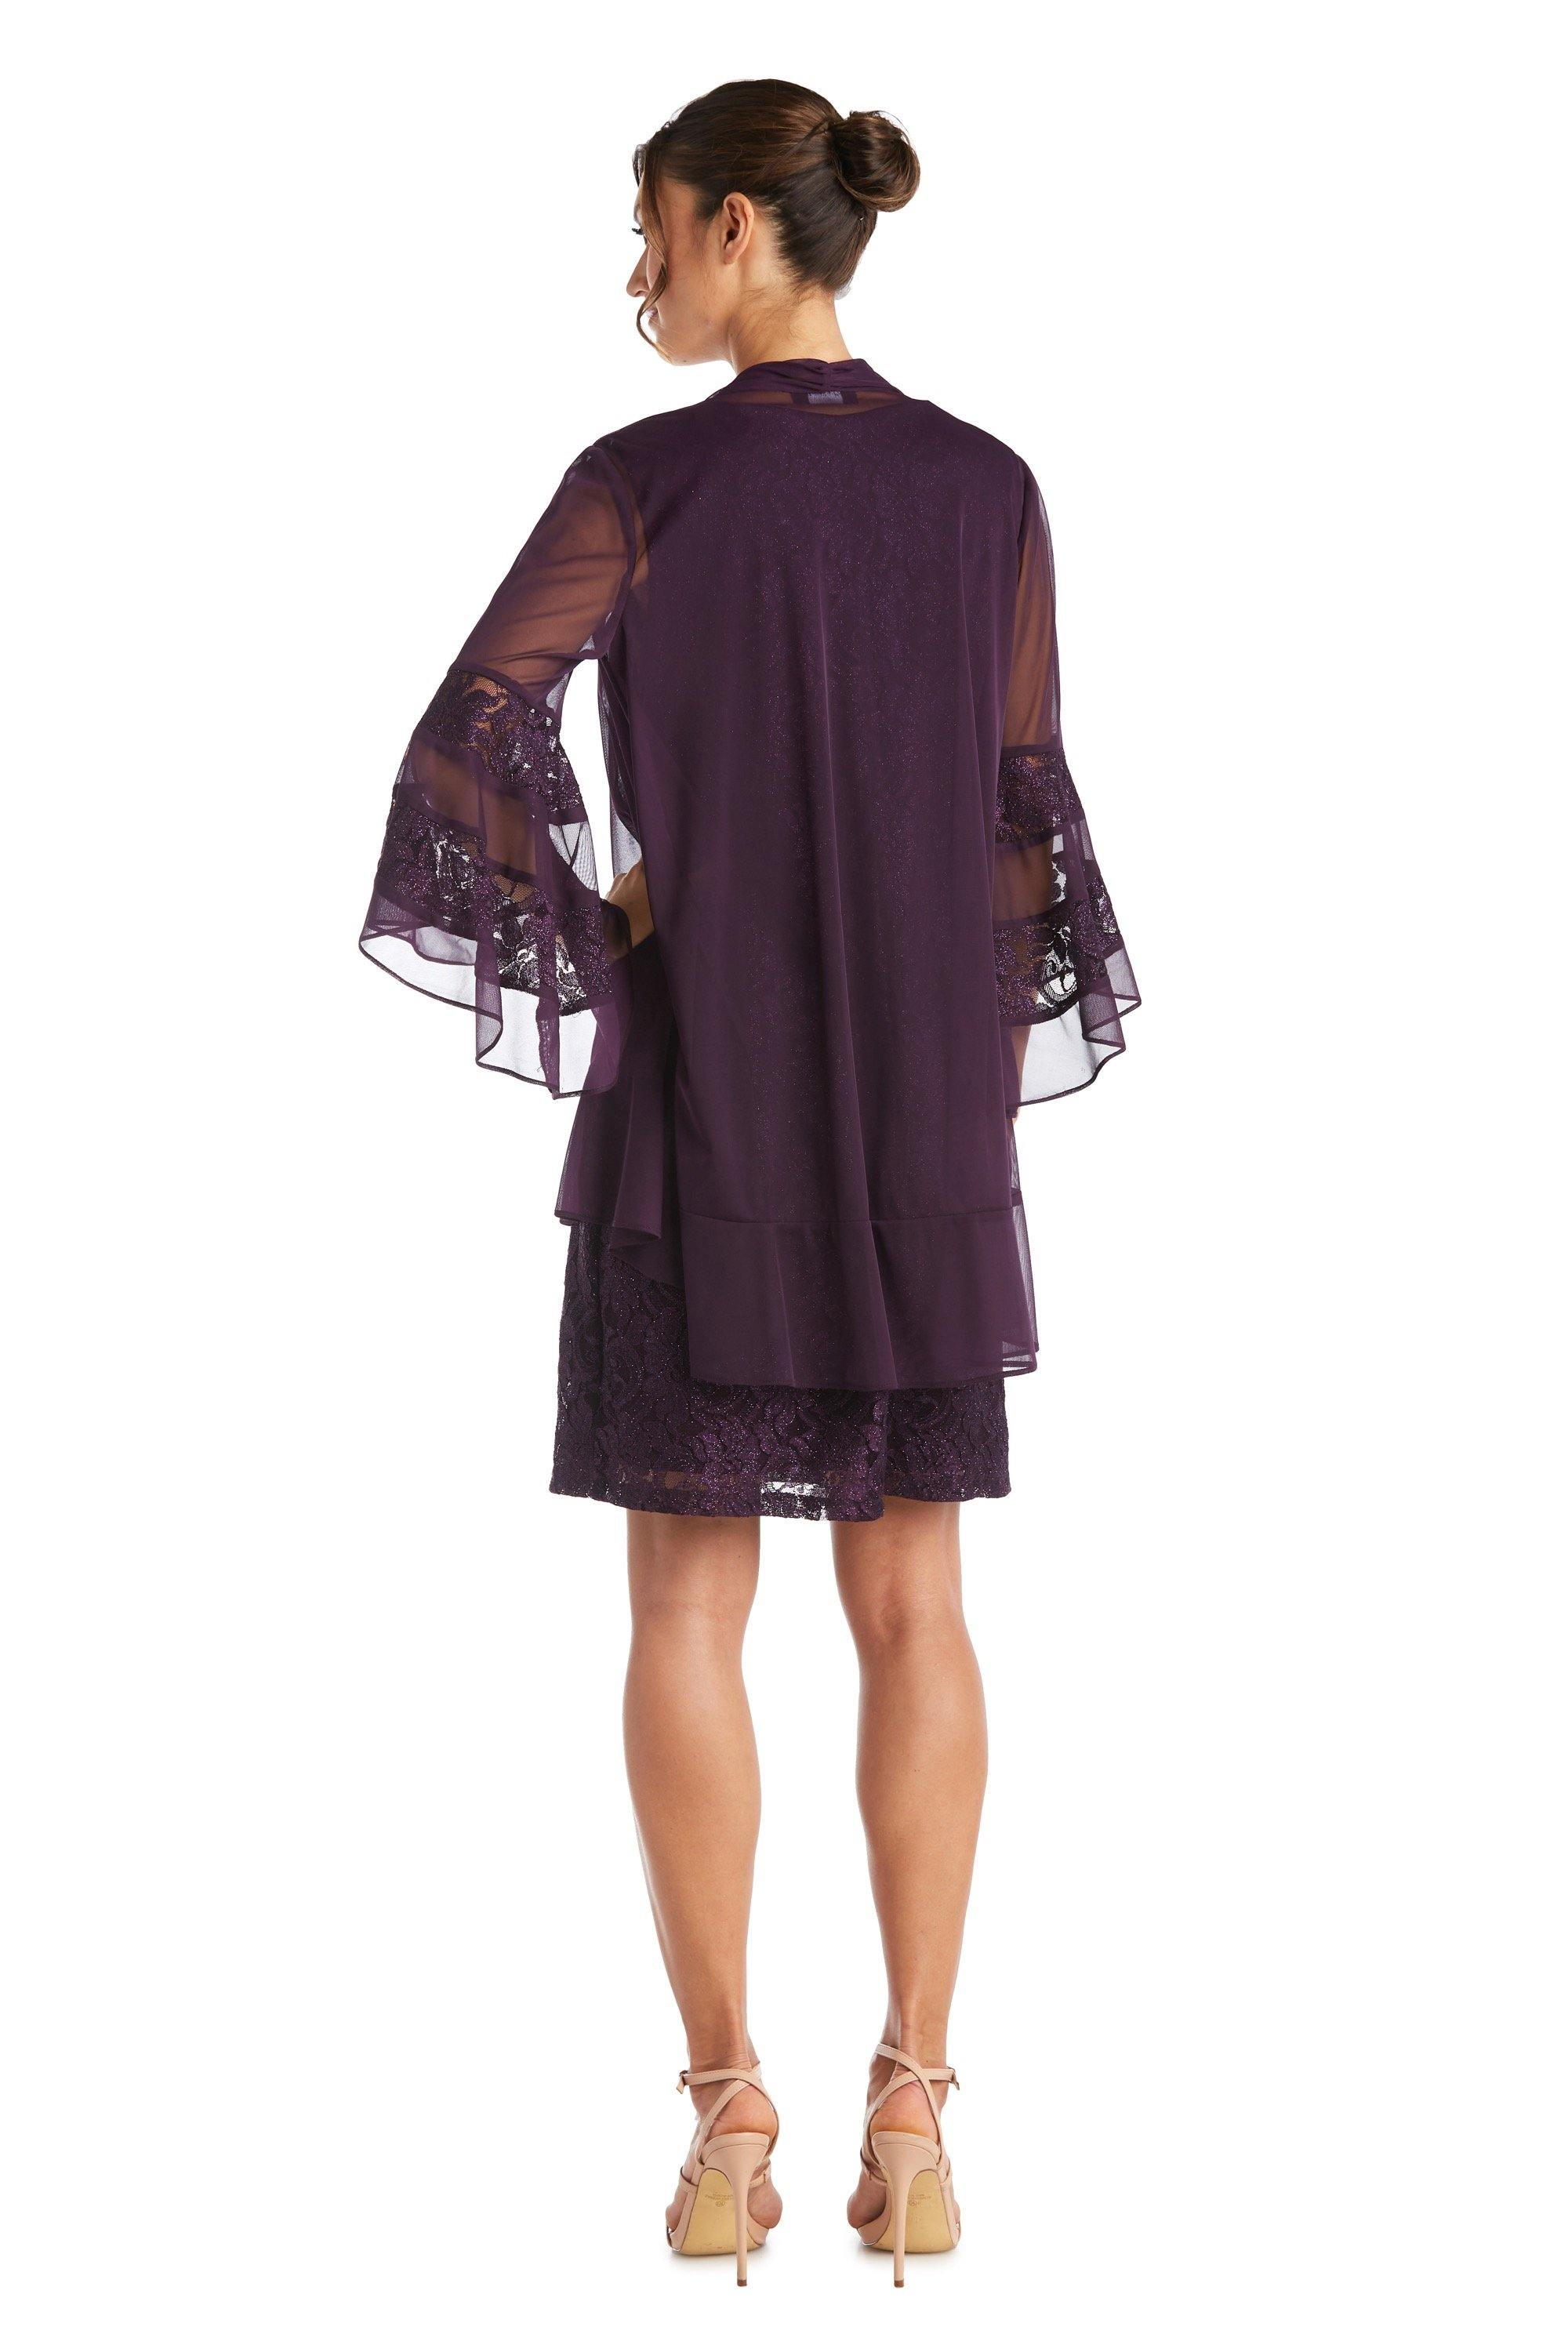 R&M Richards Chiffon Jacket Formal Dress 2421 - The Dress Outlet